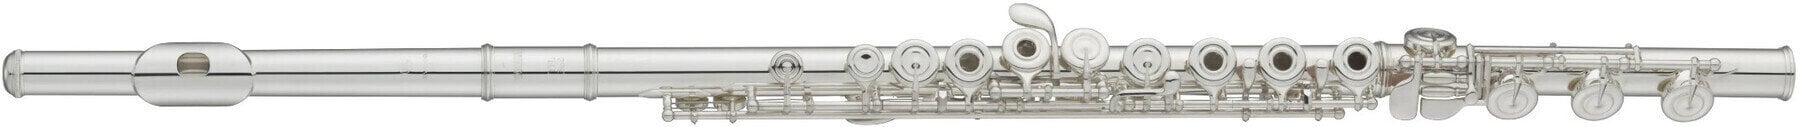 Concert flute Yamaha YFL 382 Concert flute